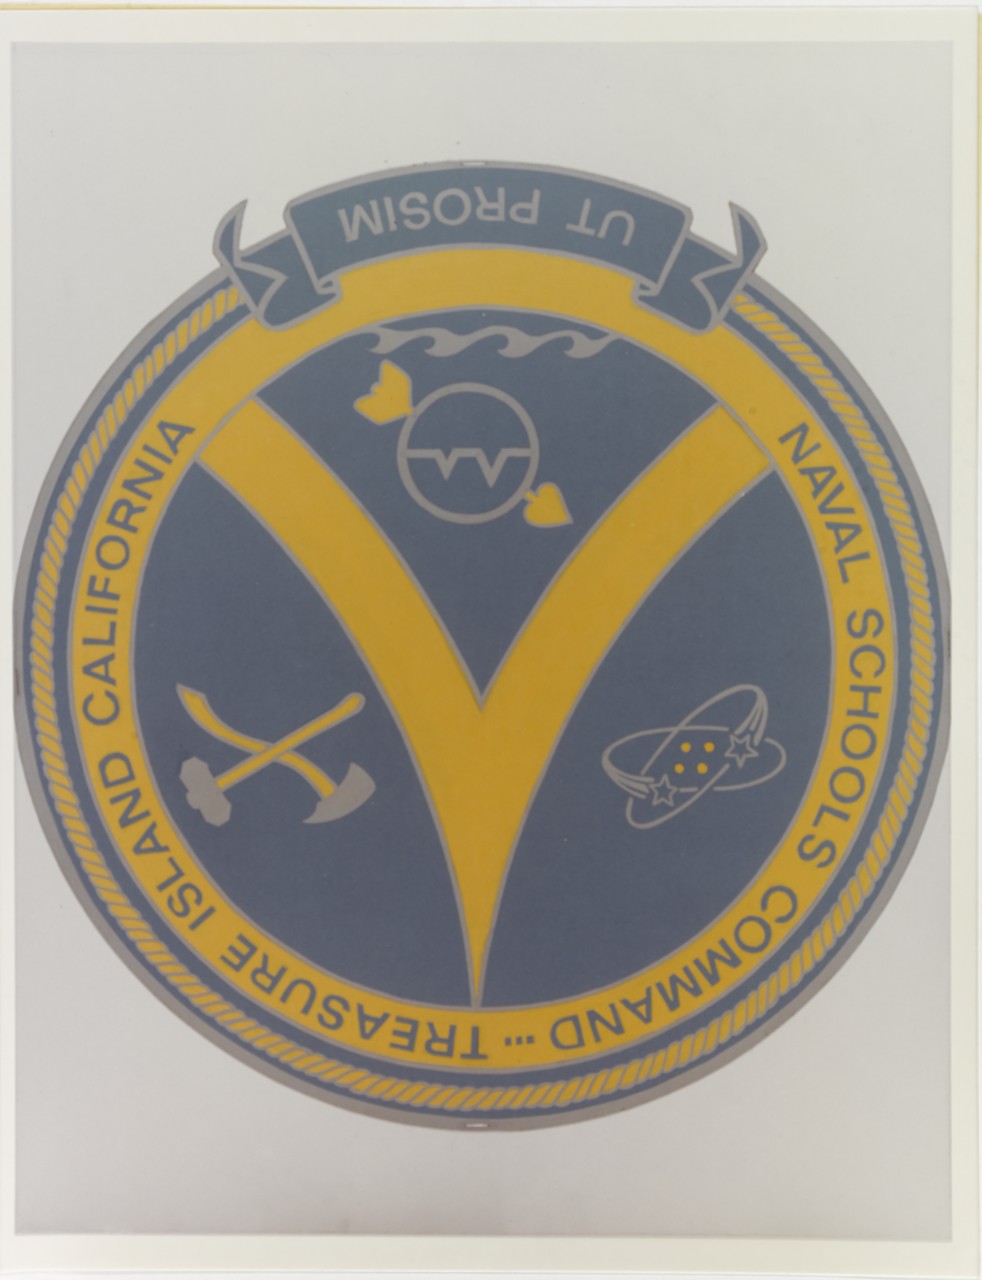 Insignia: Naval Schools Command Treasure Island, California